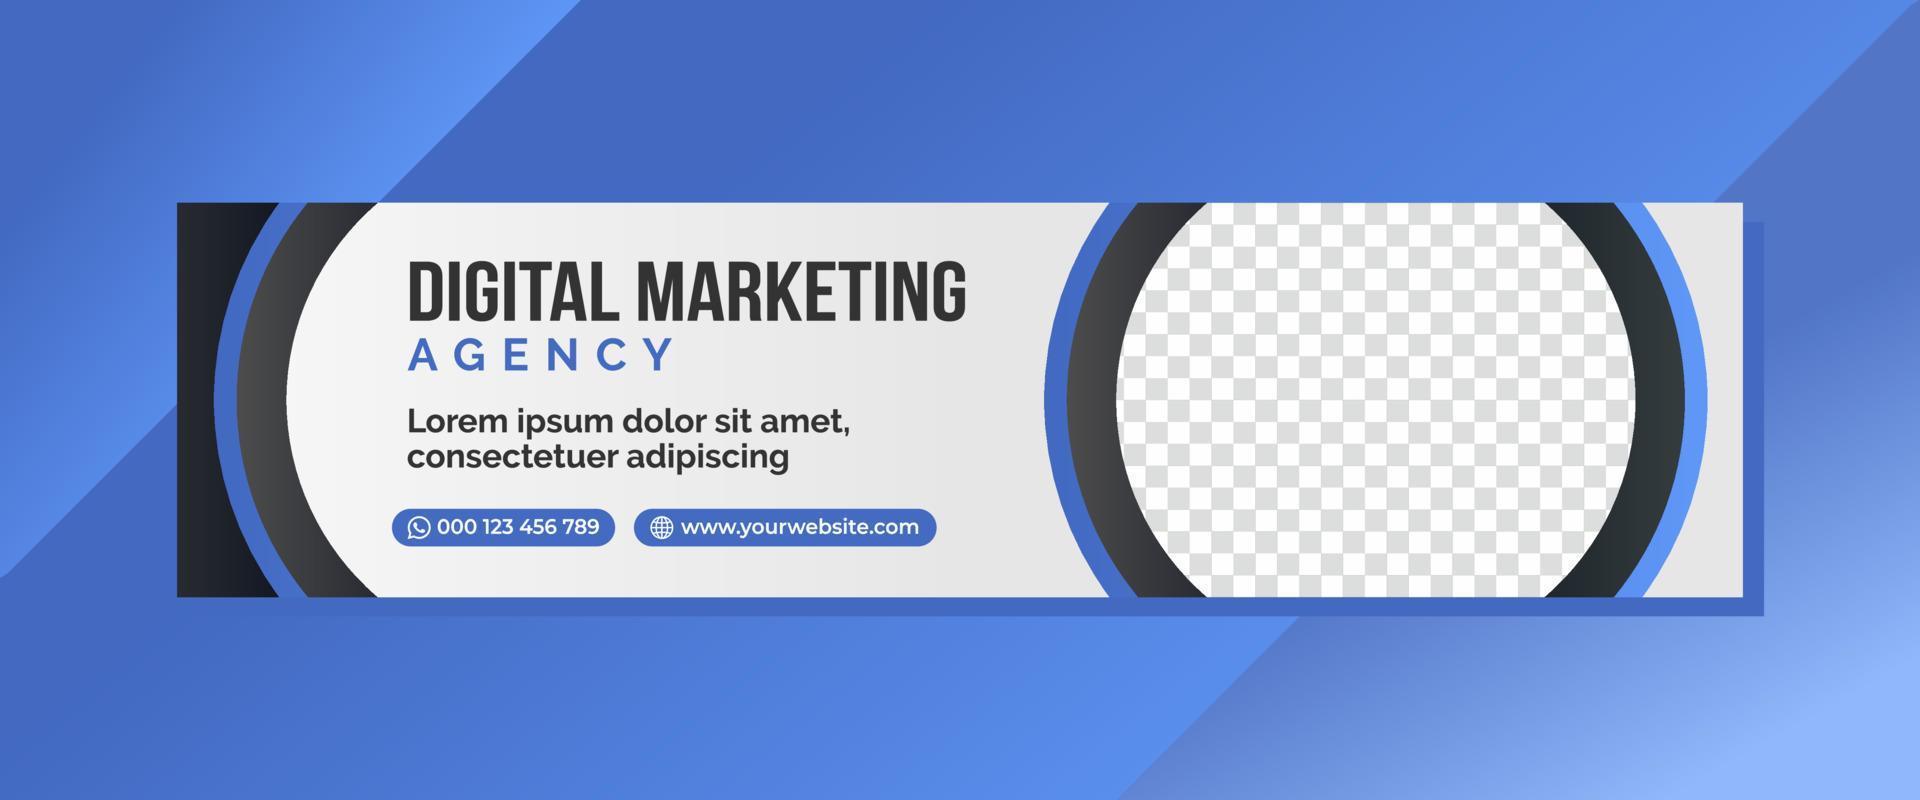 Digital Marketing Banner Template vector